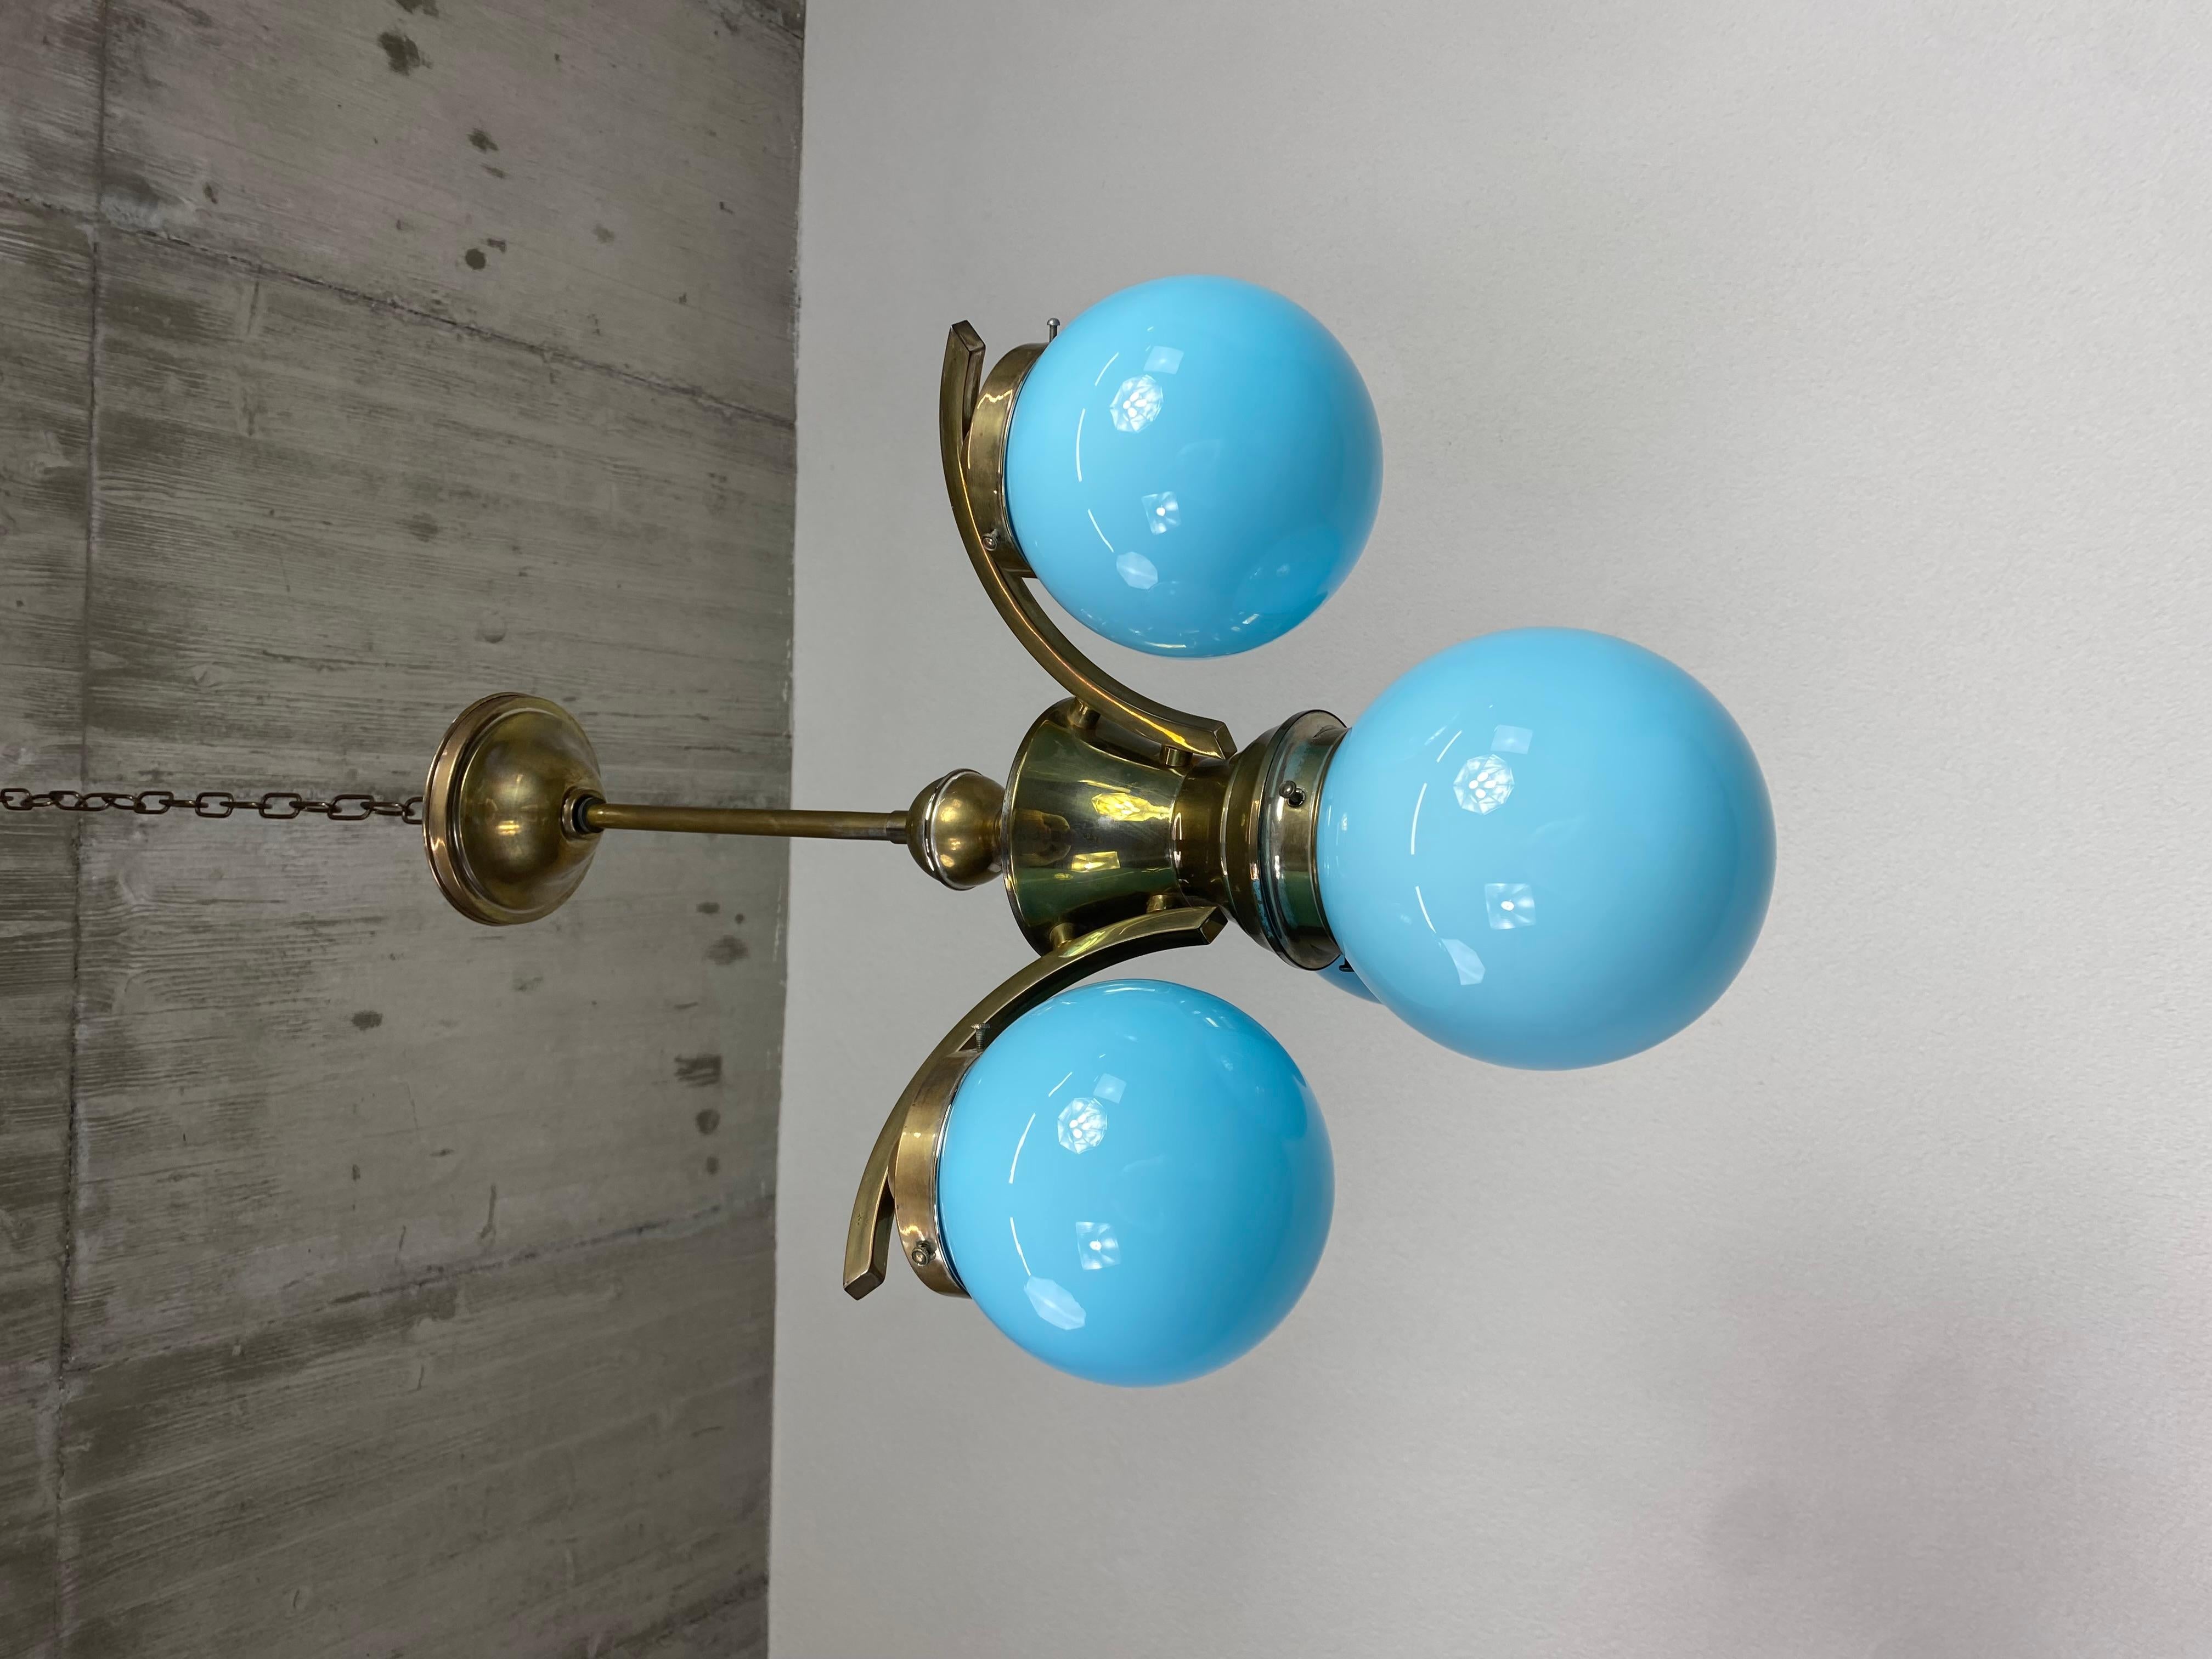 Art deco chandelier with blue lampshades in original vintage condition.
